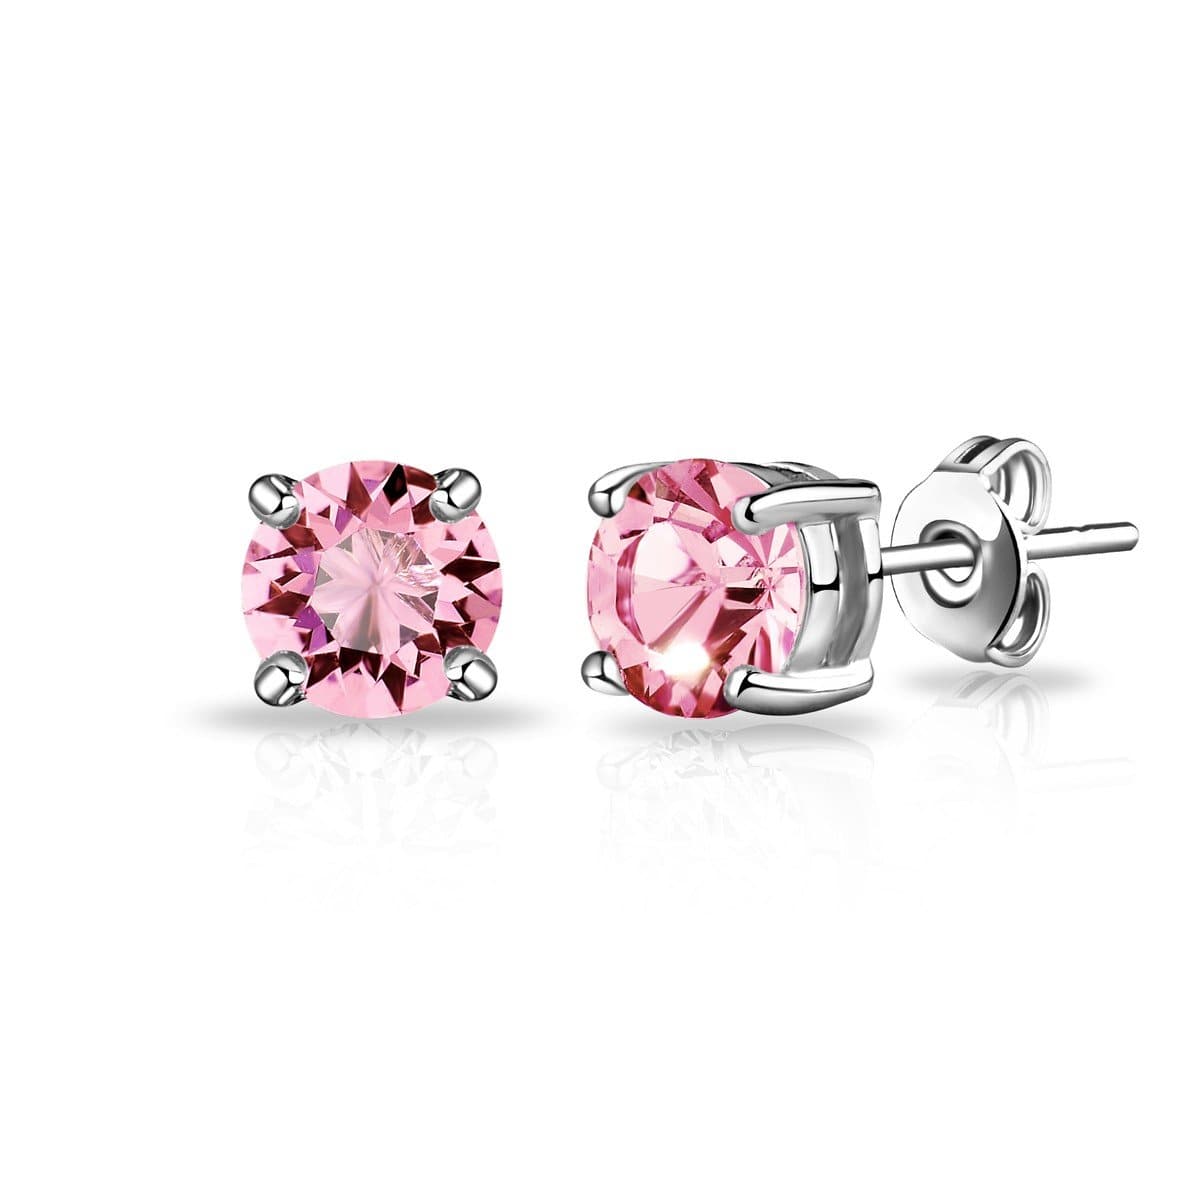 Pink Stud Earrings Created with Zircondia® Crystals by Philip Jones Jewellery